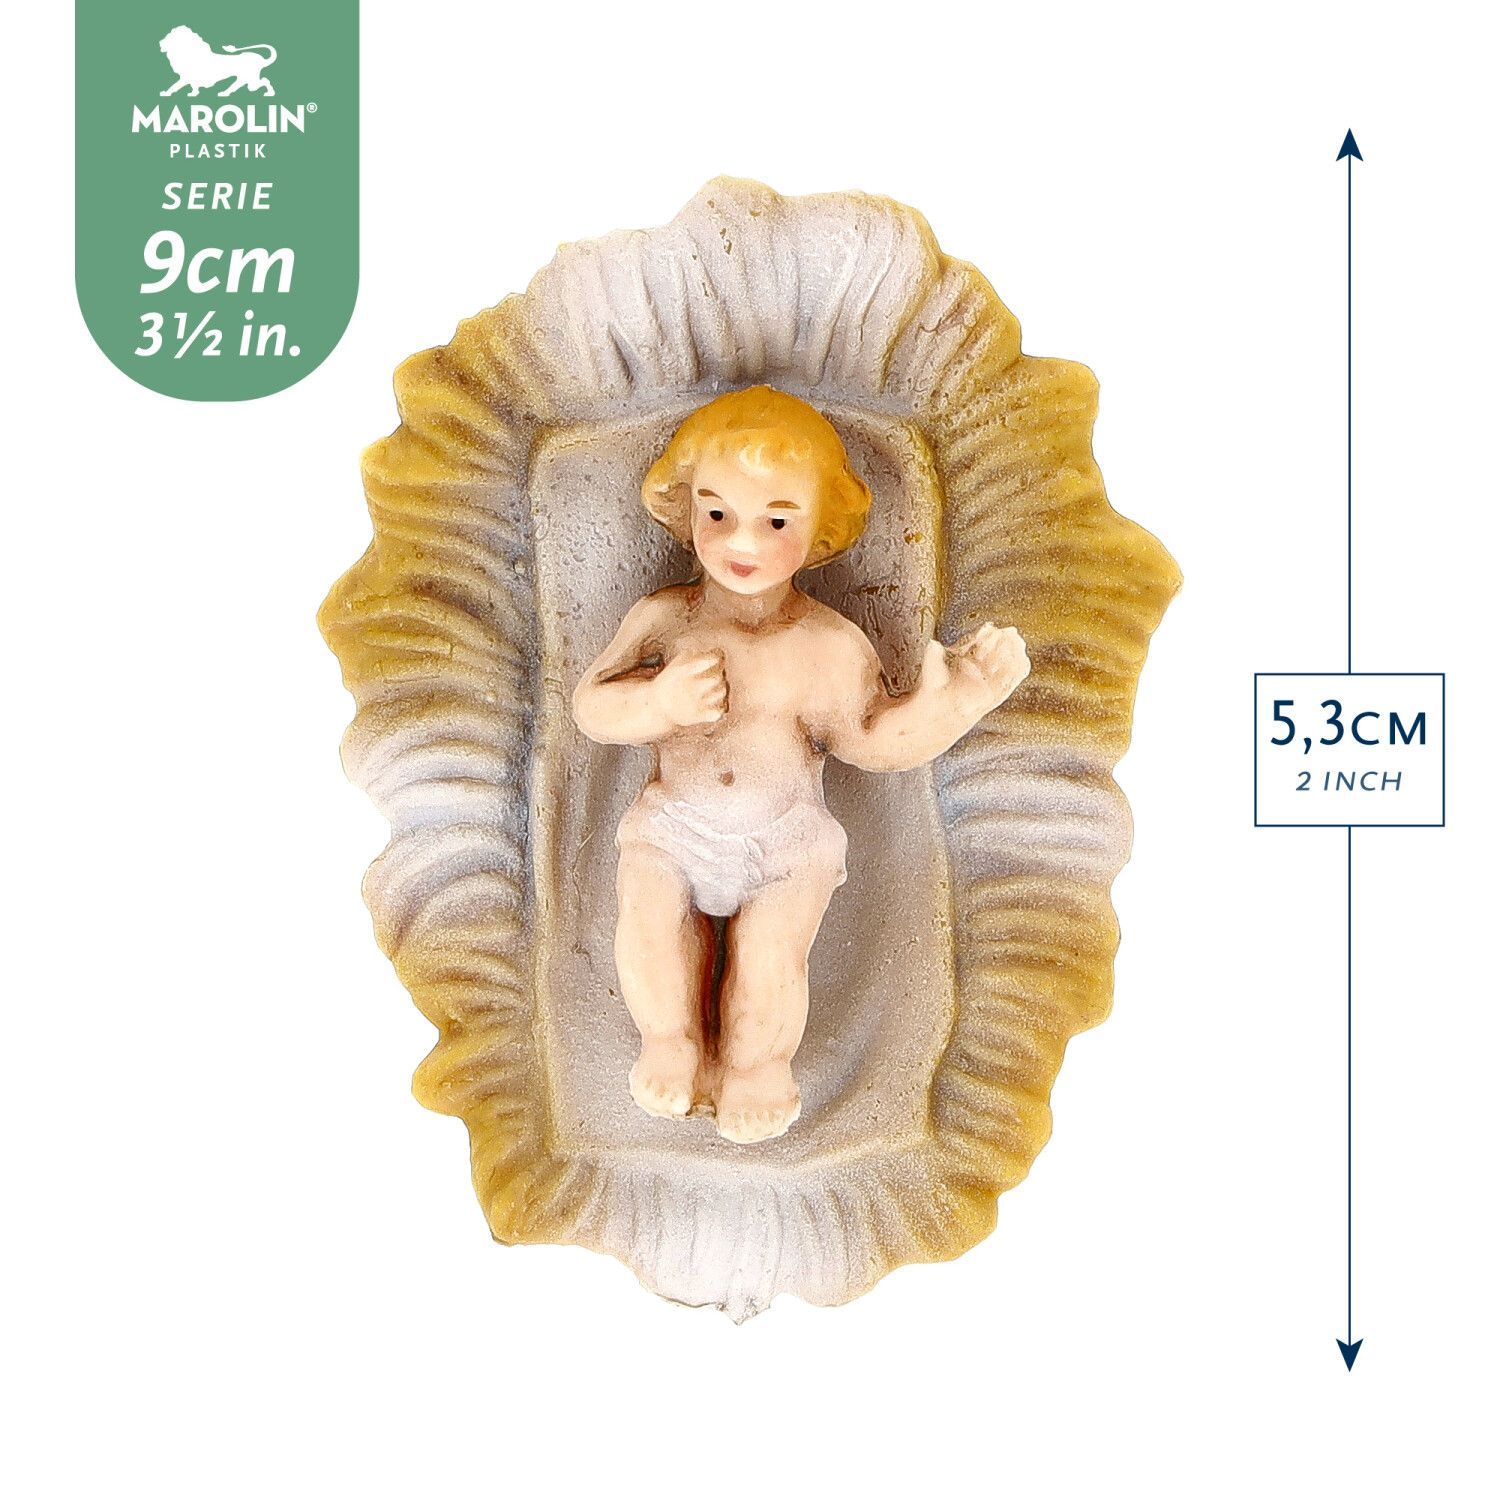 Crib with infant Jesus - Marolin Plastik - Resin Nativity figure - made in Germany